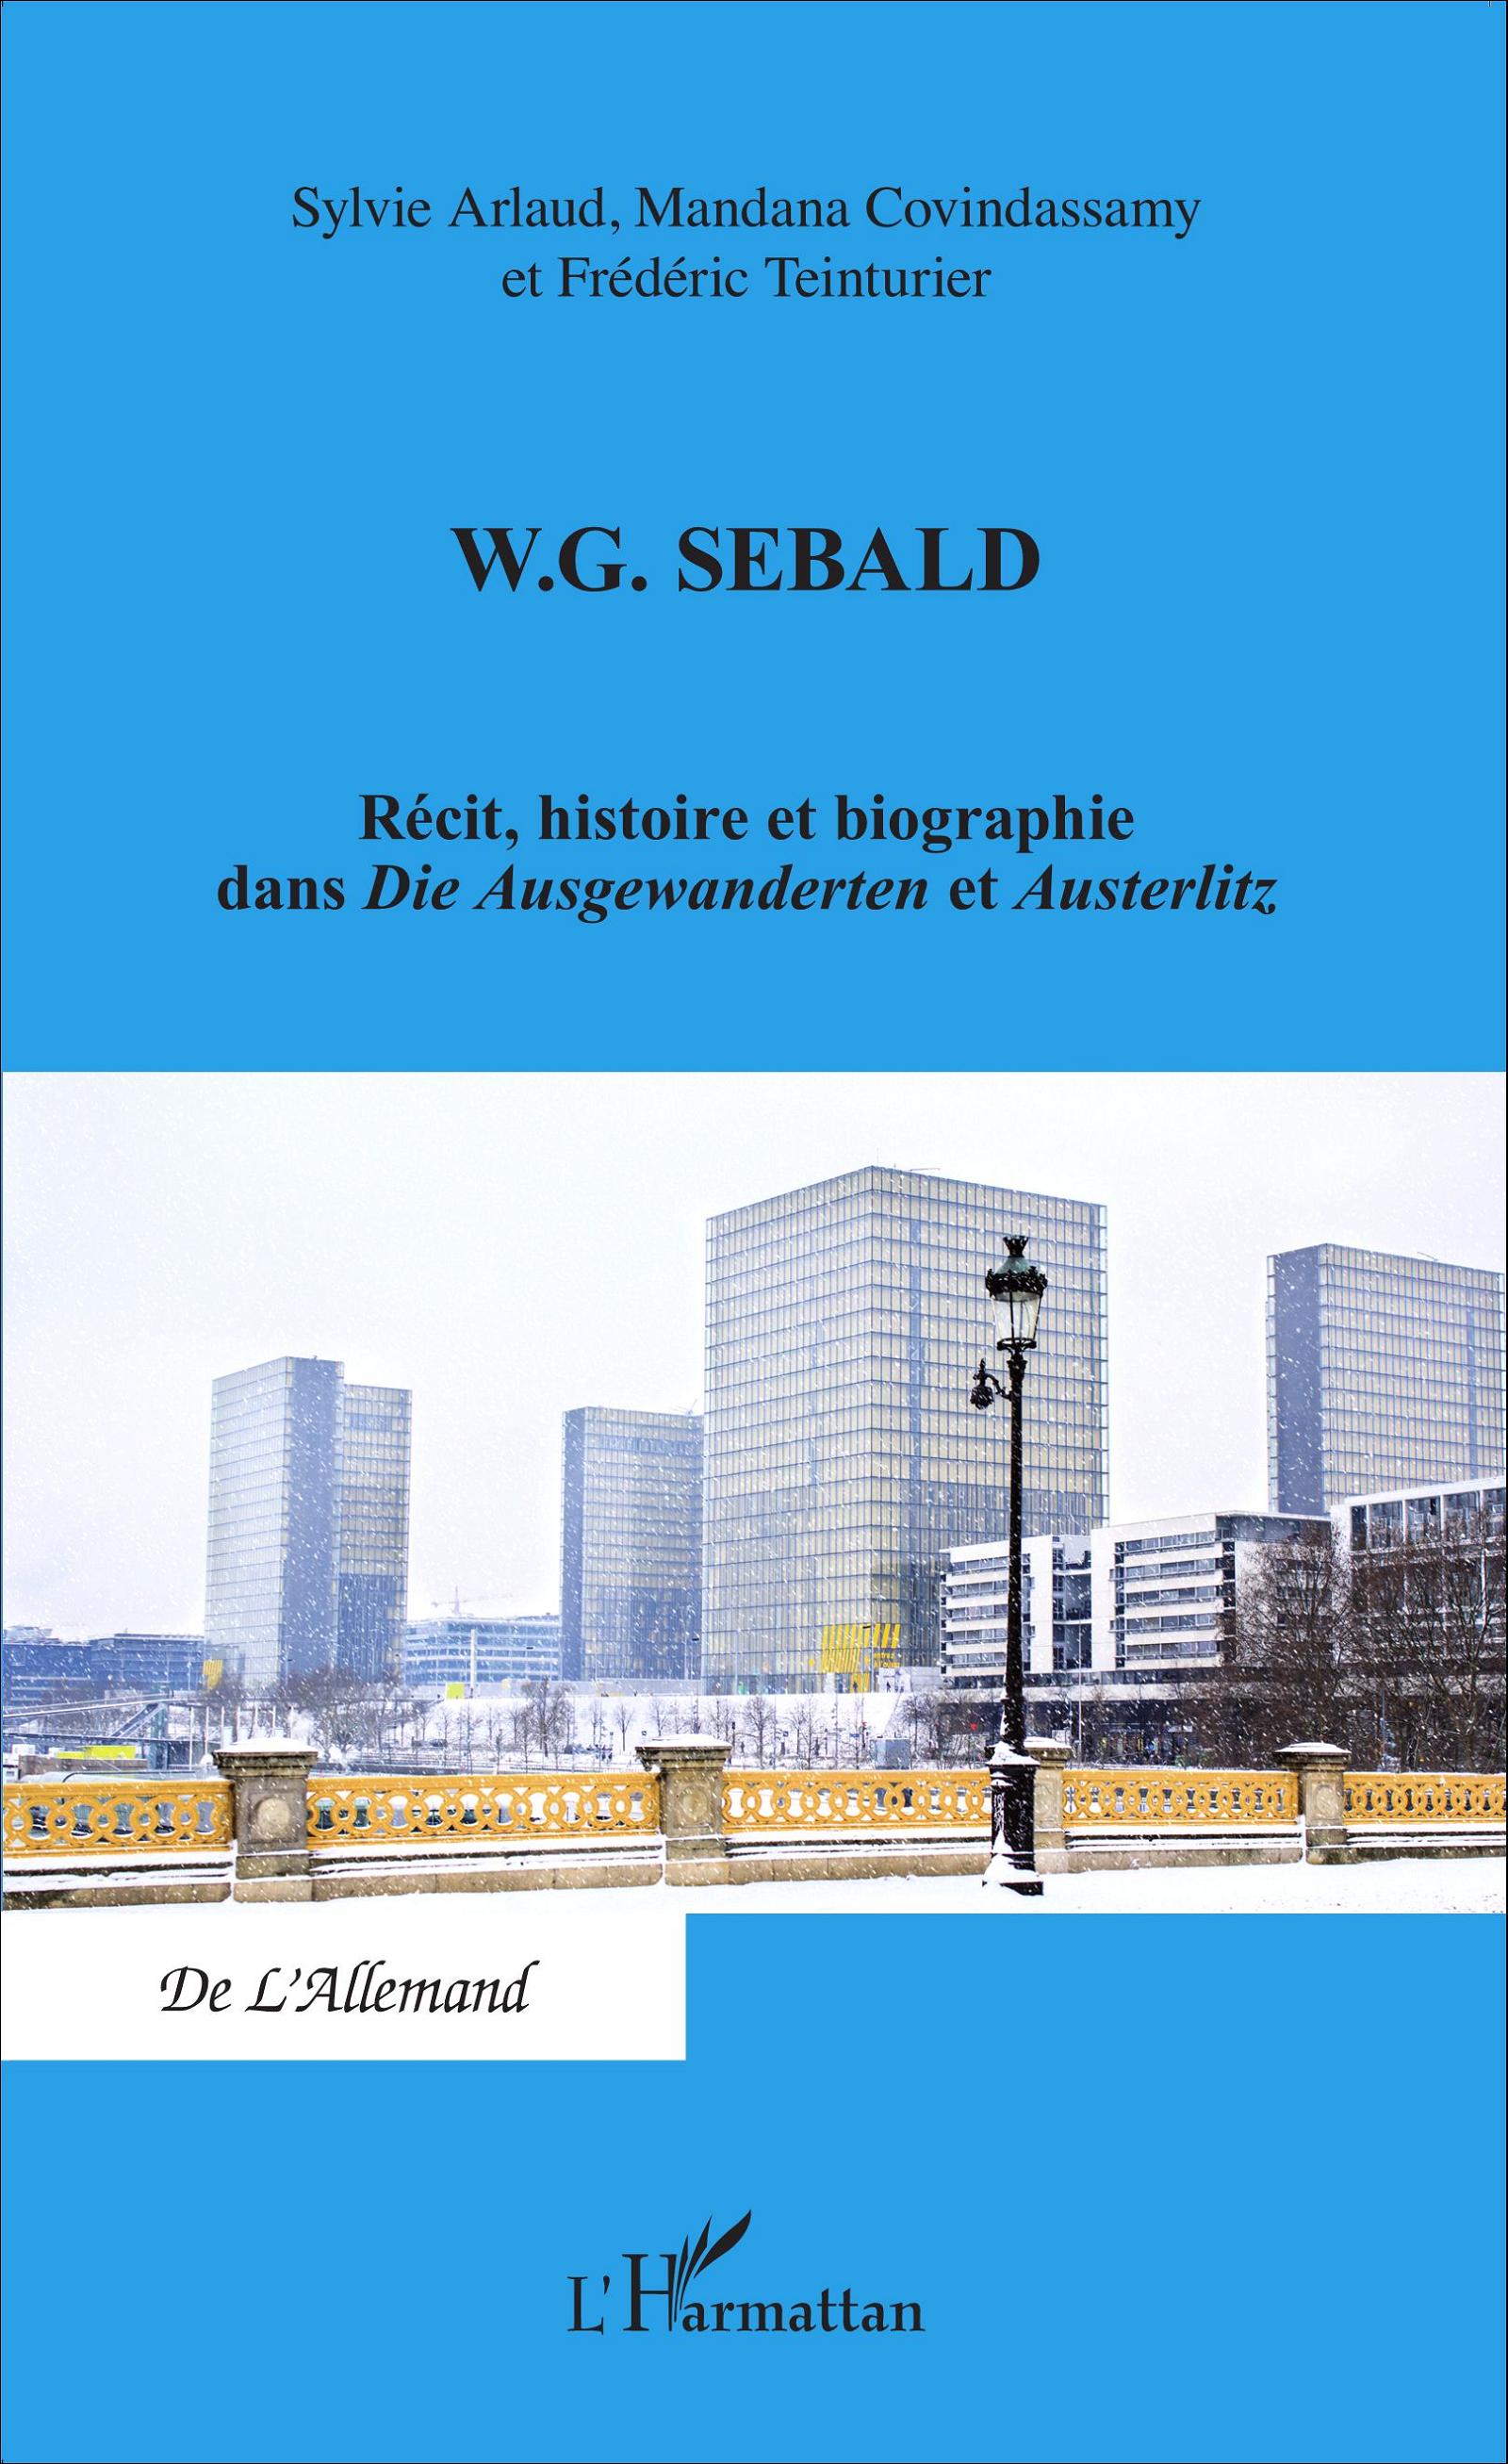 S. Arlaud, M. Covindassamy et F. Teinturier, W. G. Sebald - Récit, histoire et biographie dans Die Ausgewanderten et Austerlitz